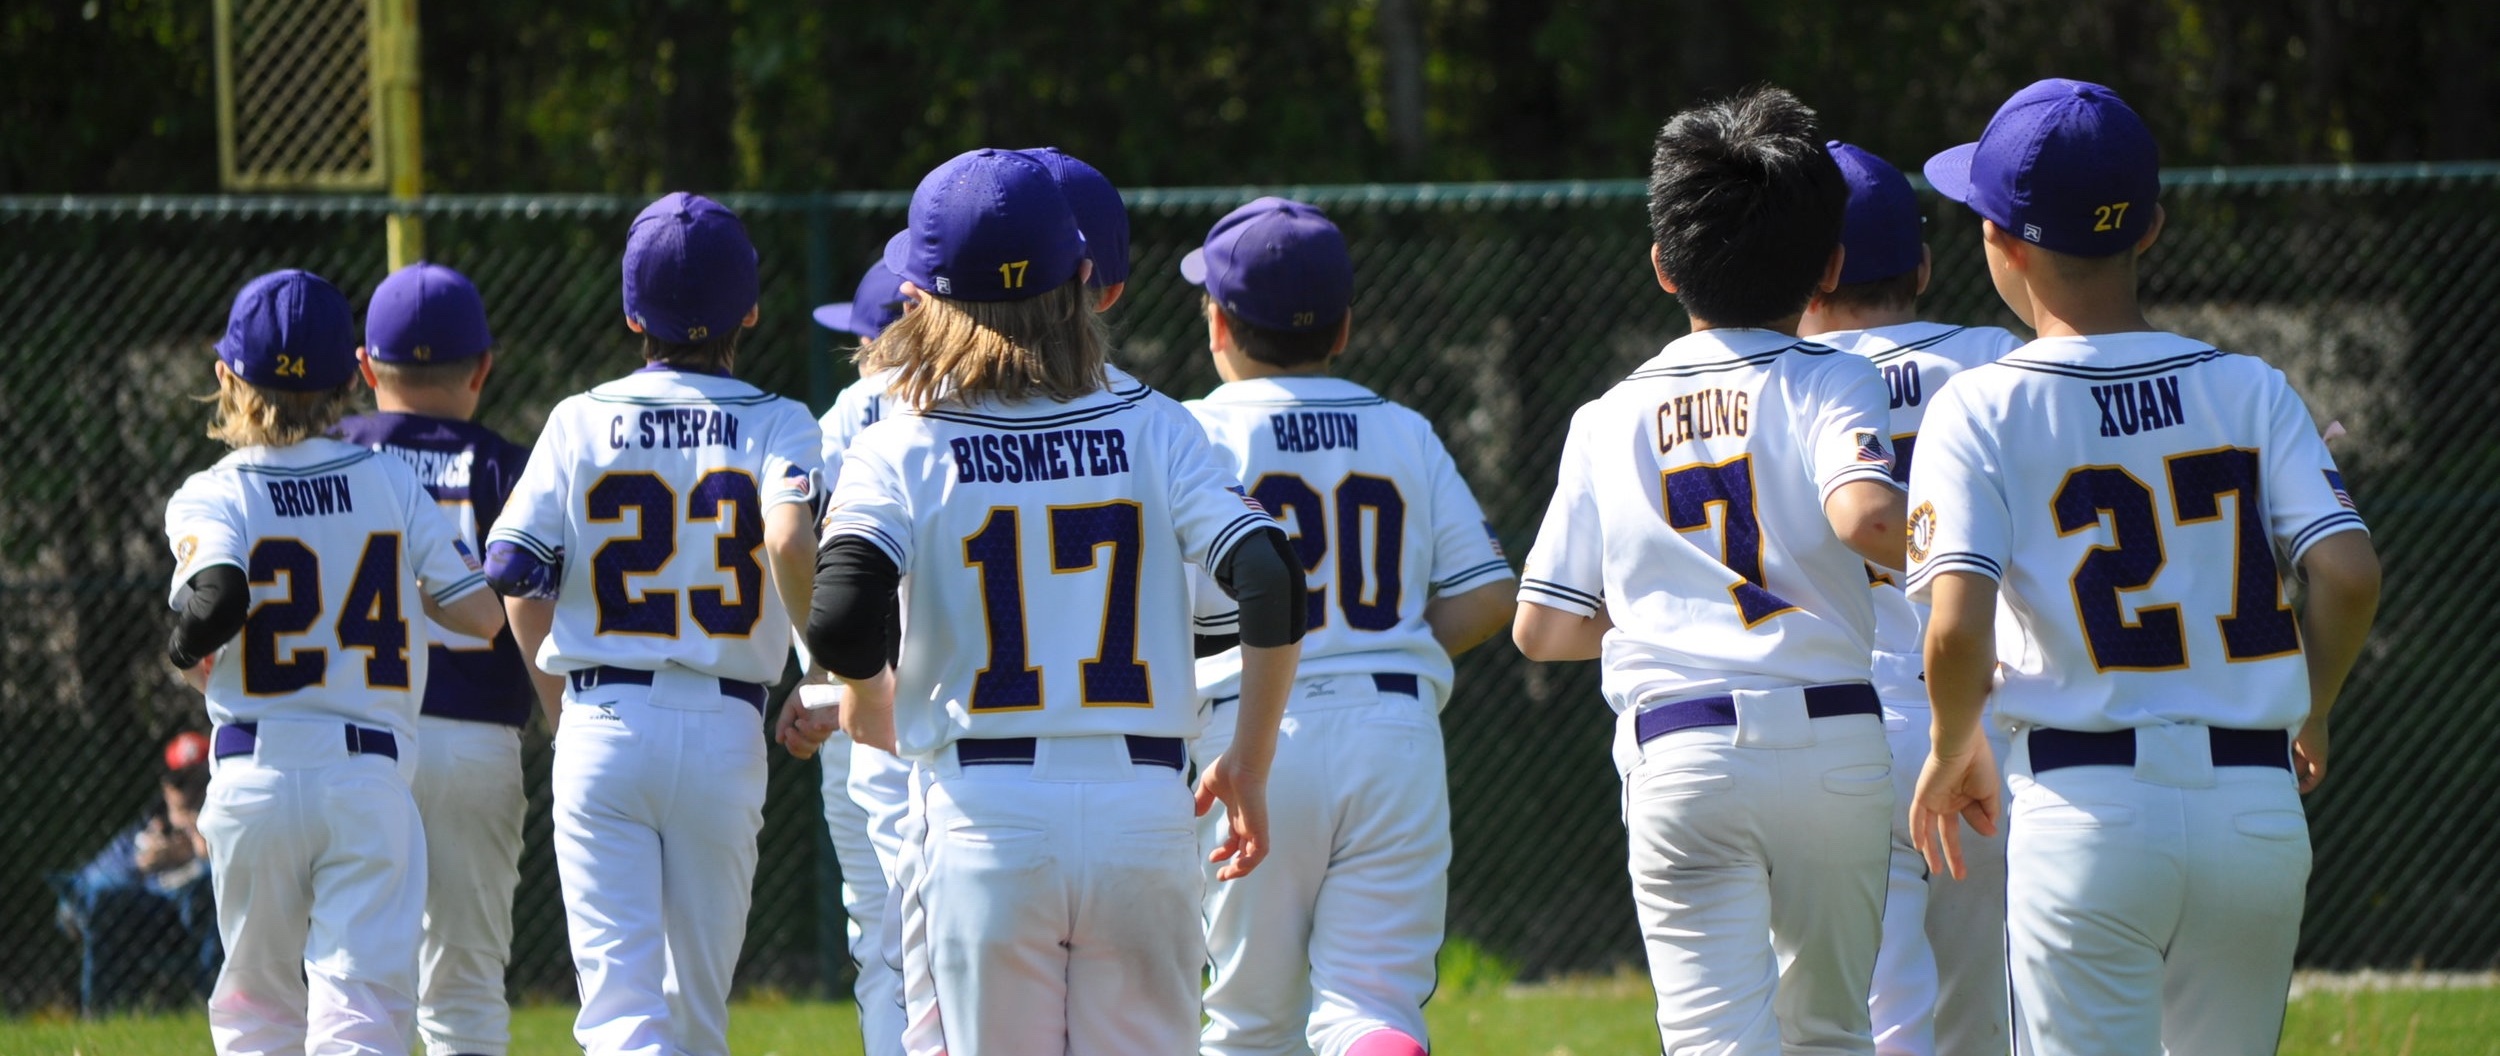 baseball team with purple uniforms